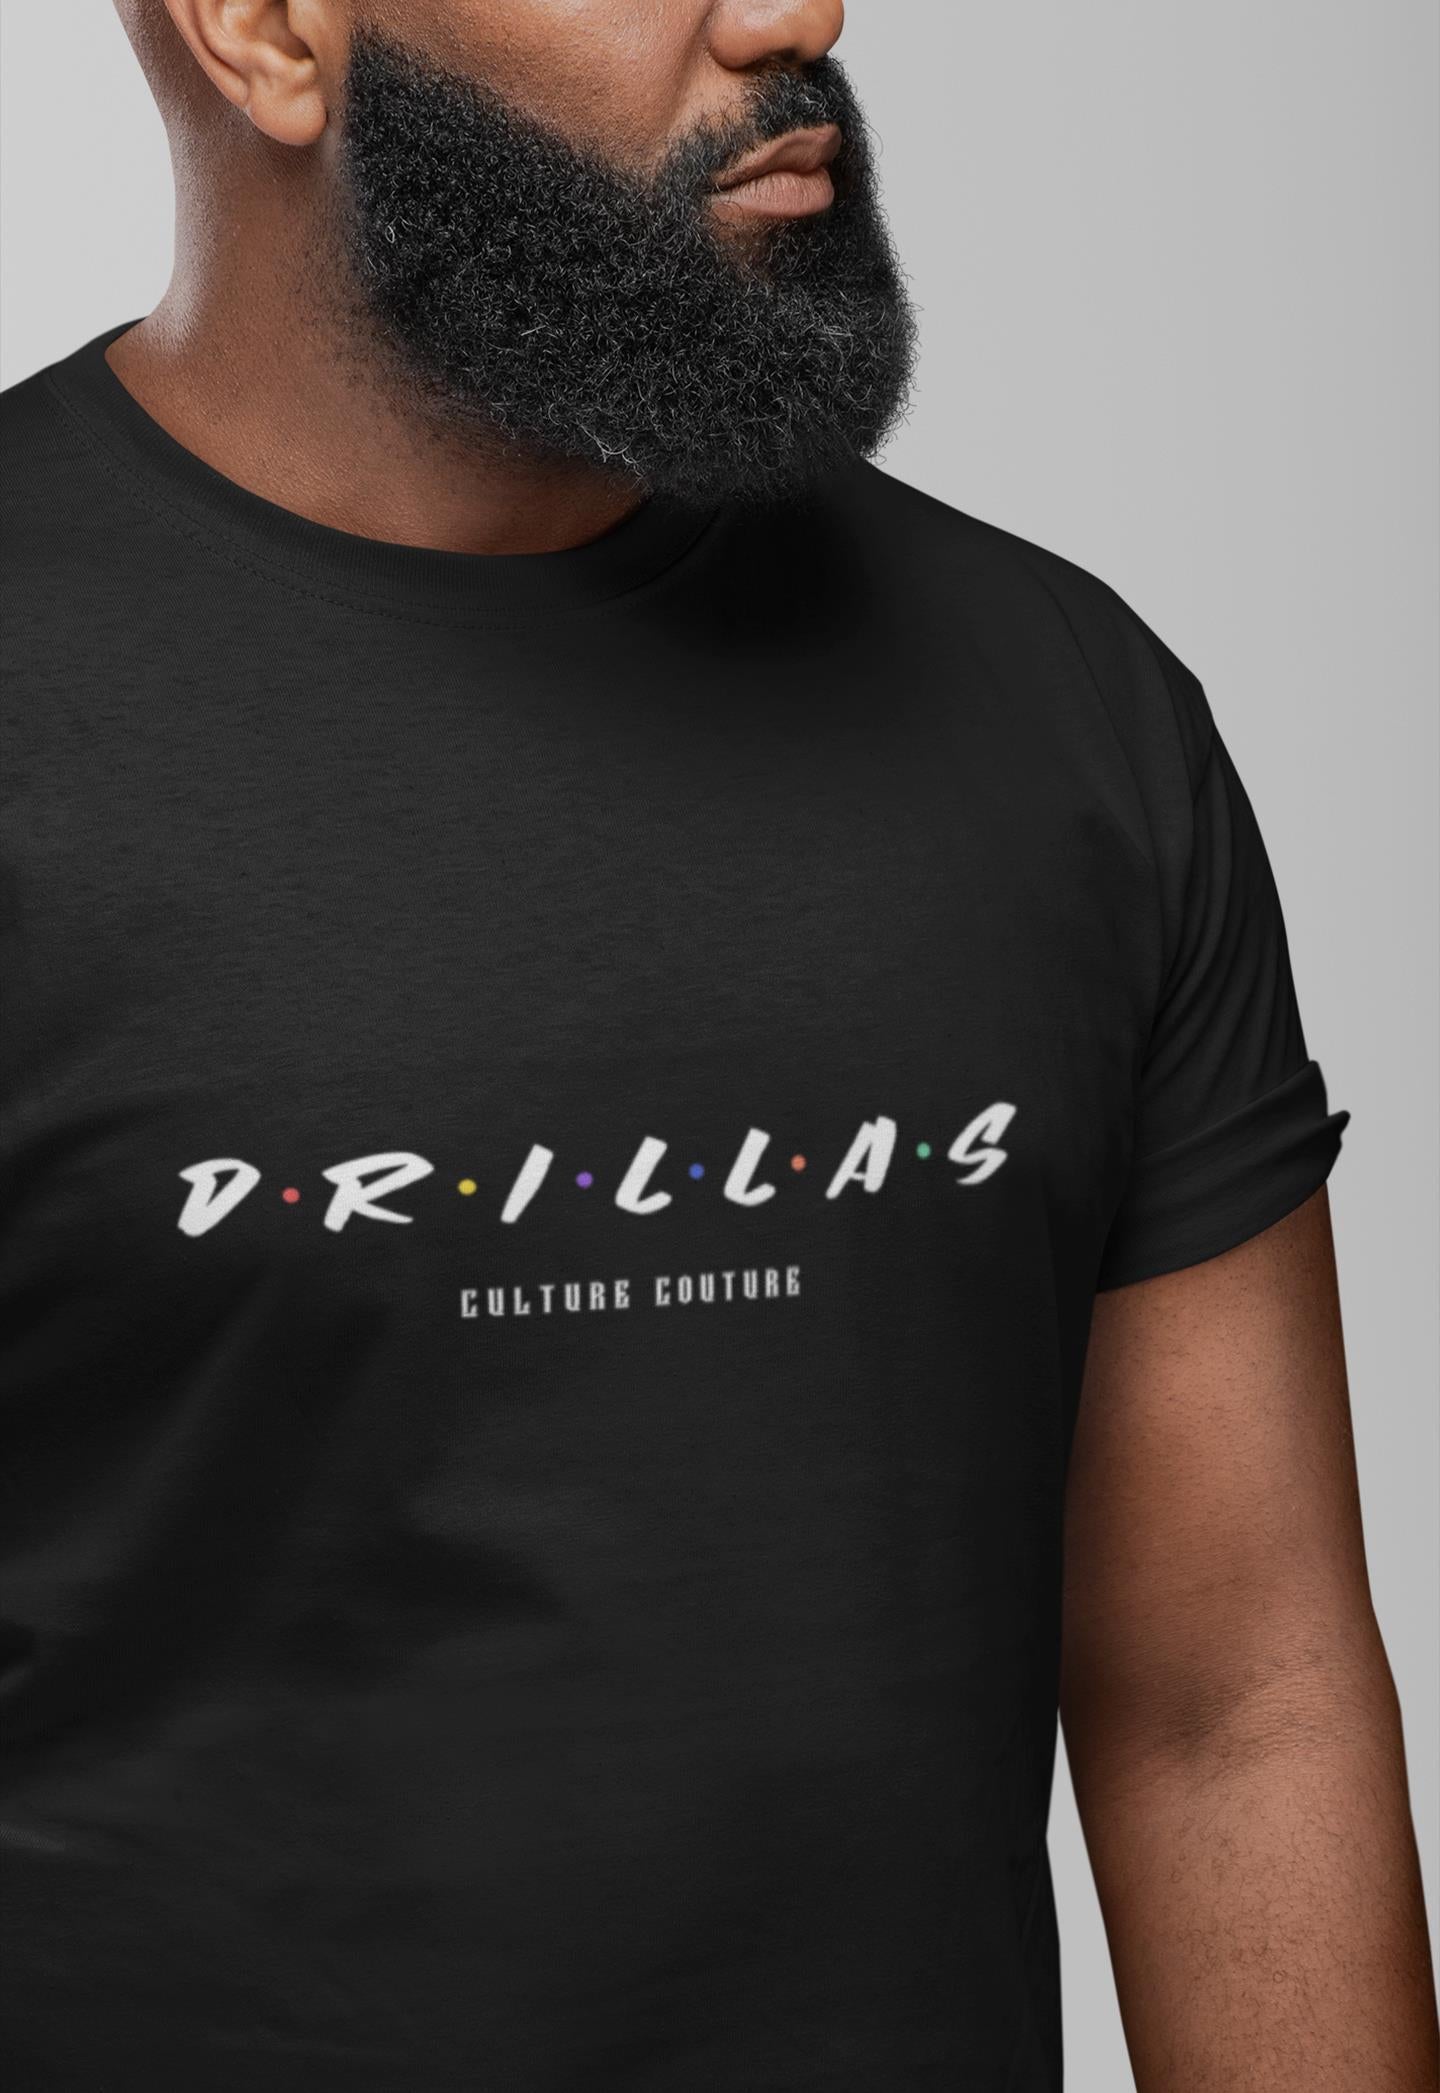 Drillas T-Shirt/Black